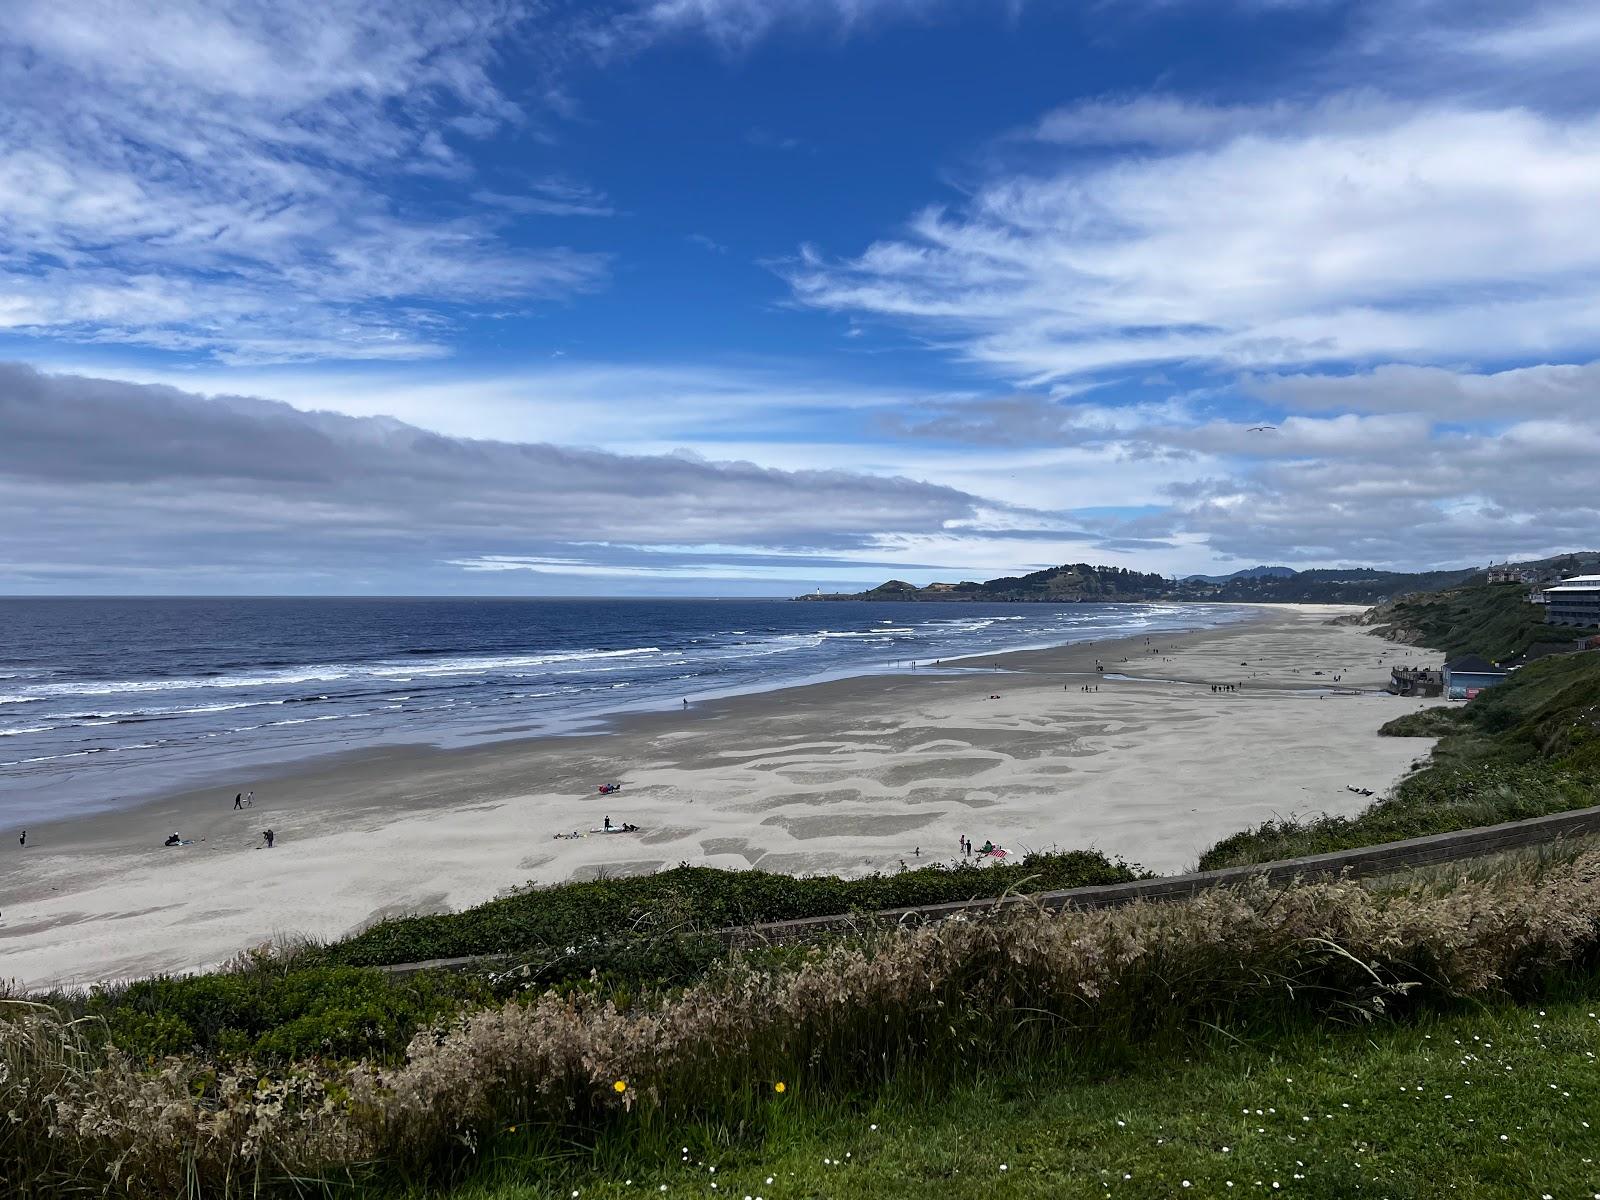 Sandee - Public Beach Access, Nye Beach, Newport, Oregon